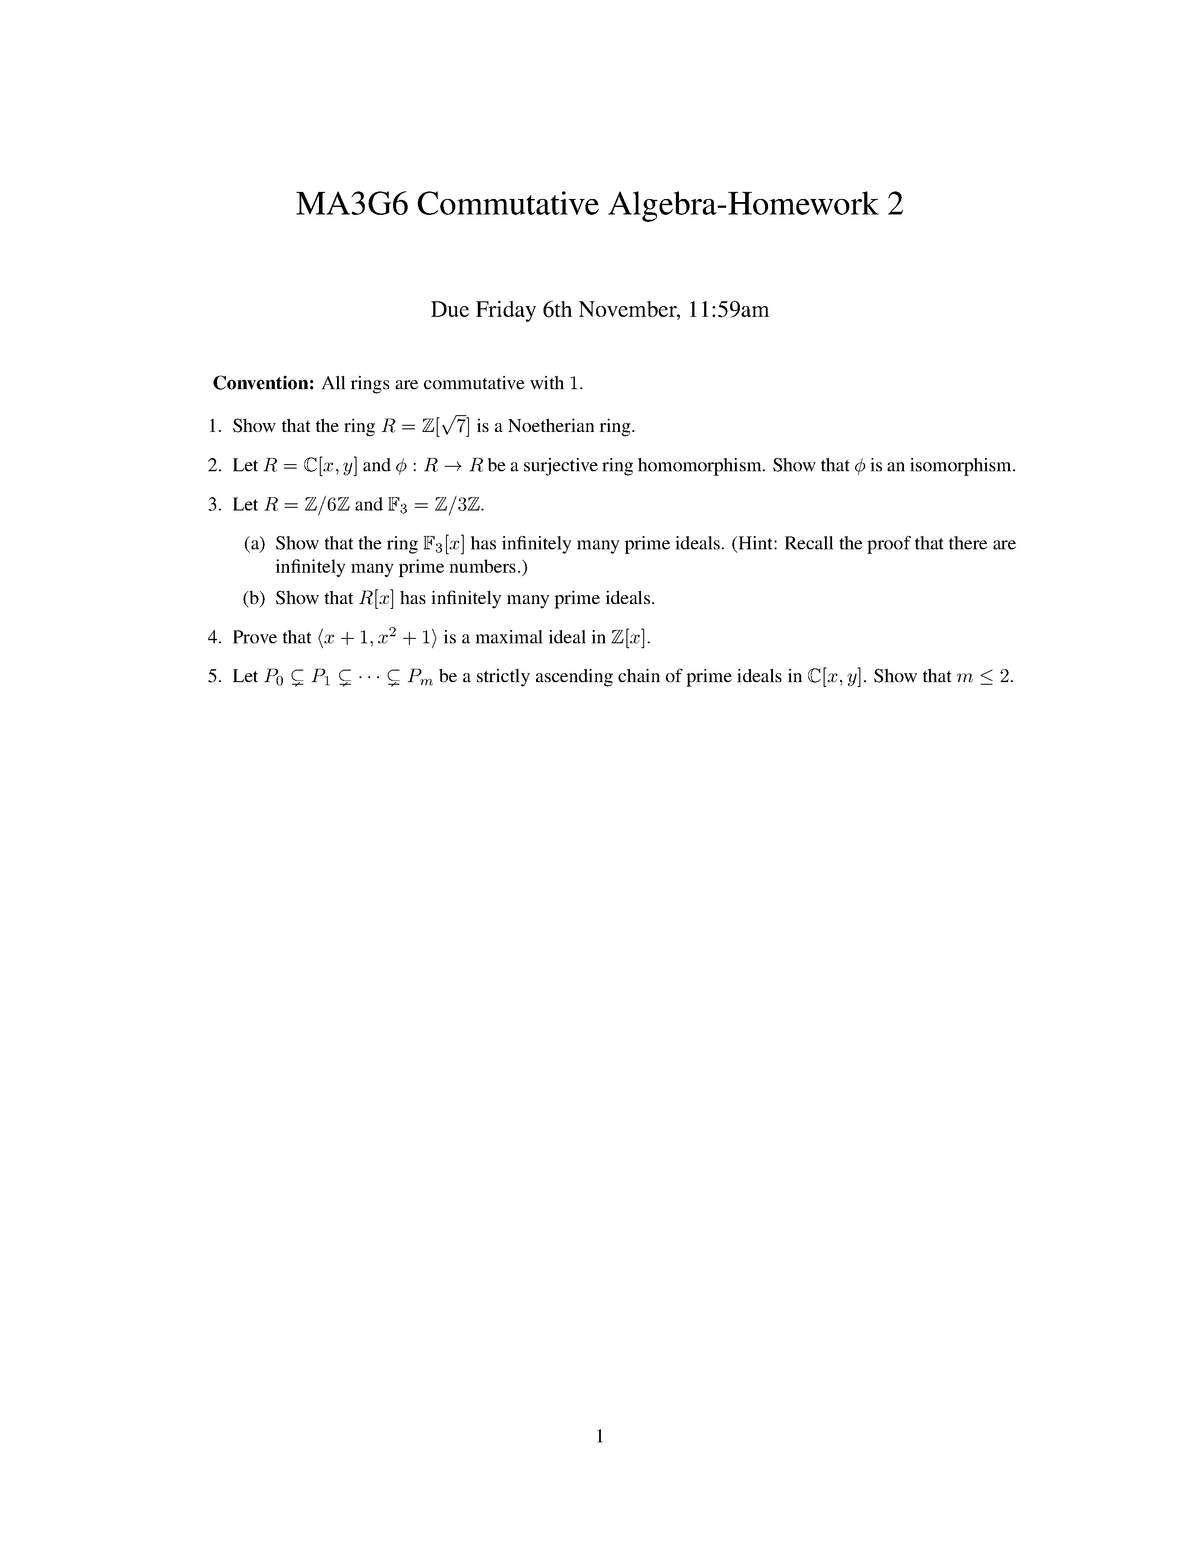 Homework 2 Second Assignment From Commutative Algebra Studocu